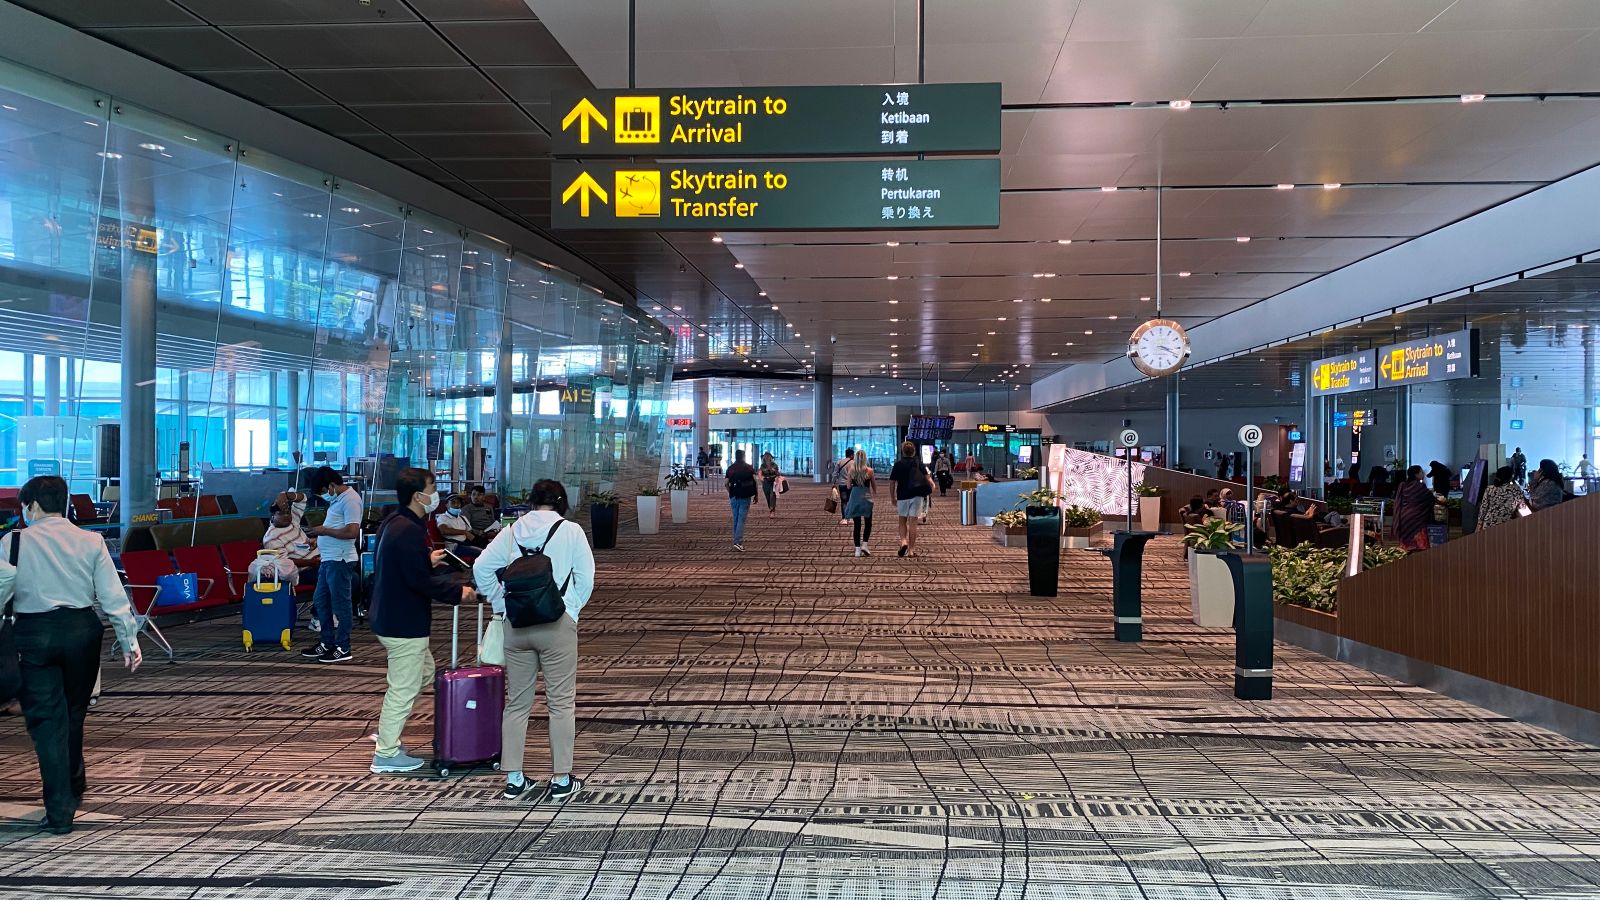 Singapore Changi Airport SkyTrain signs